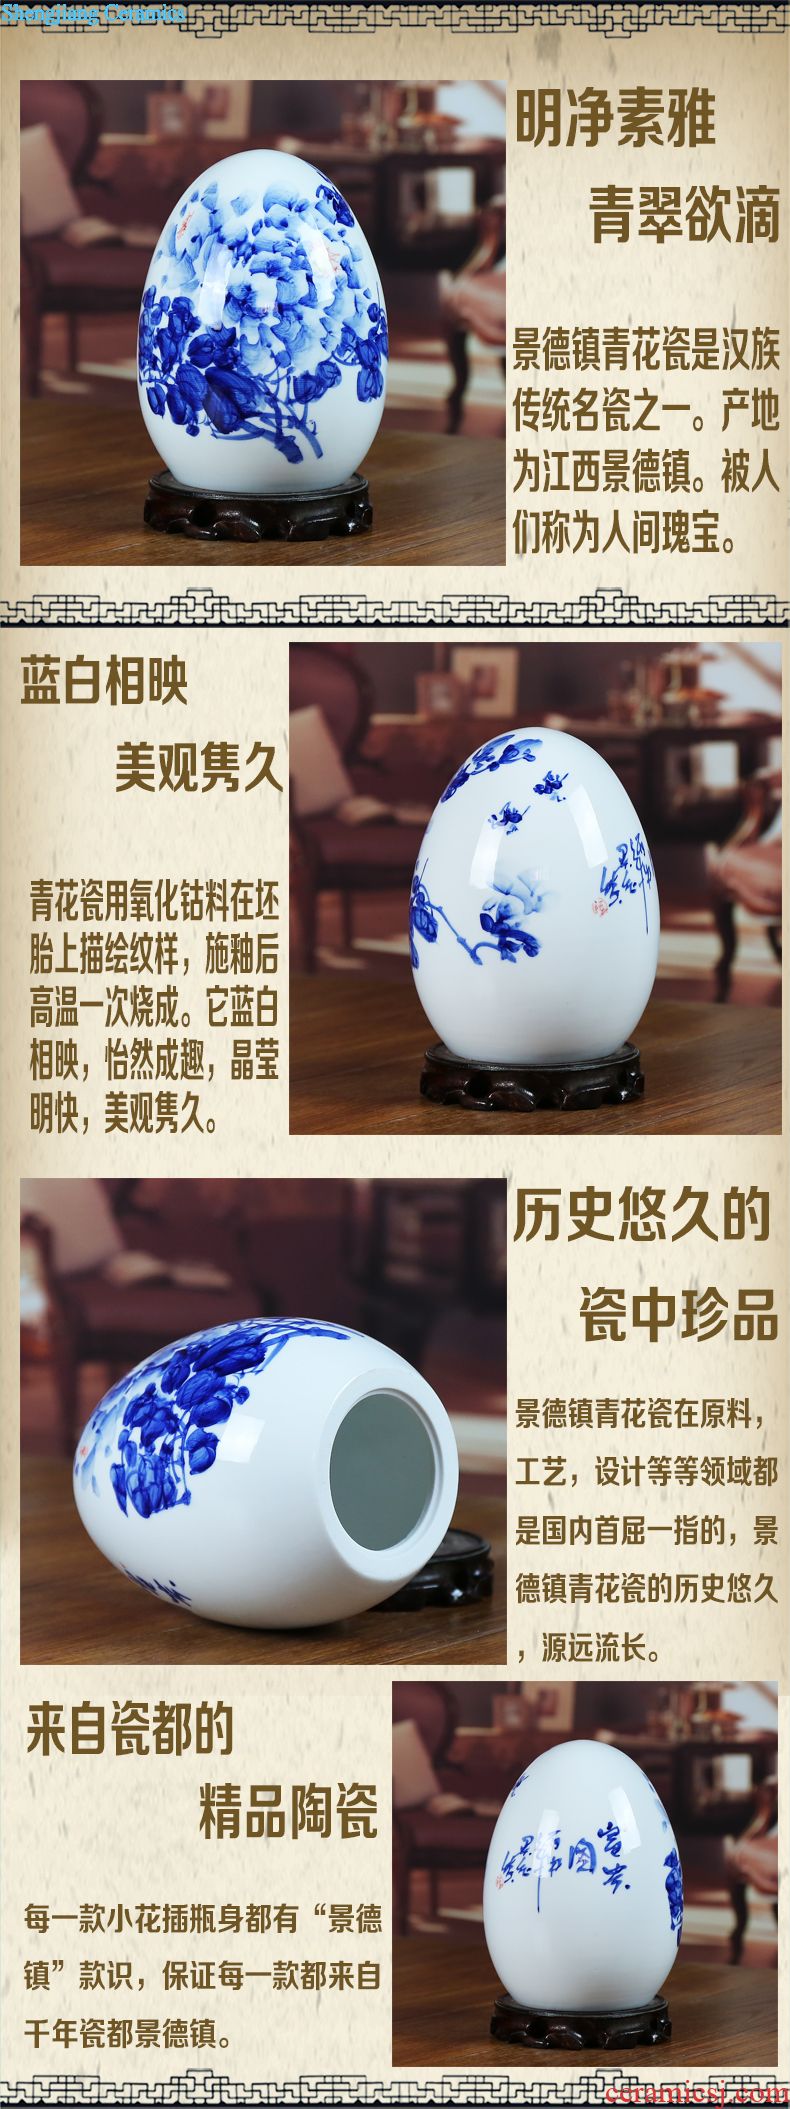 Flower of jun porcelain kiln jingdezhen ceramics glaze big vase classical modern home sitting room adornment handicraft furnishing articles